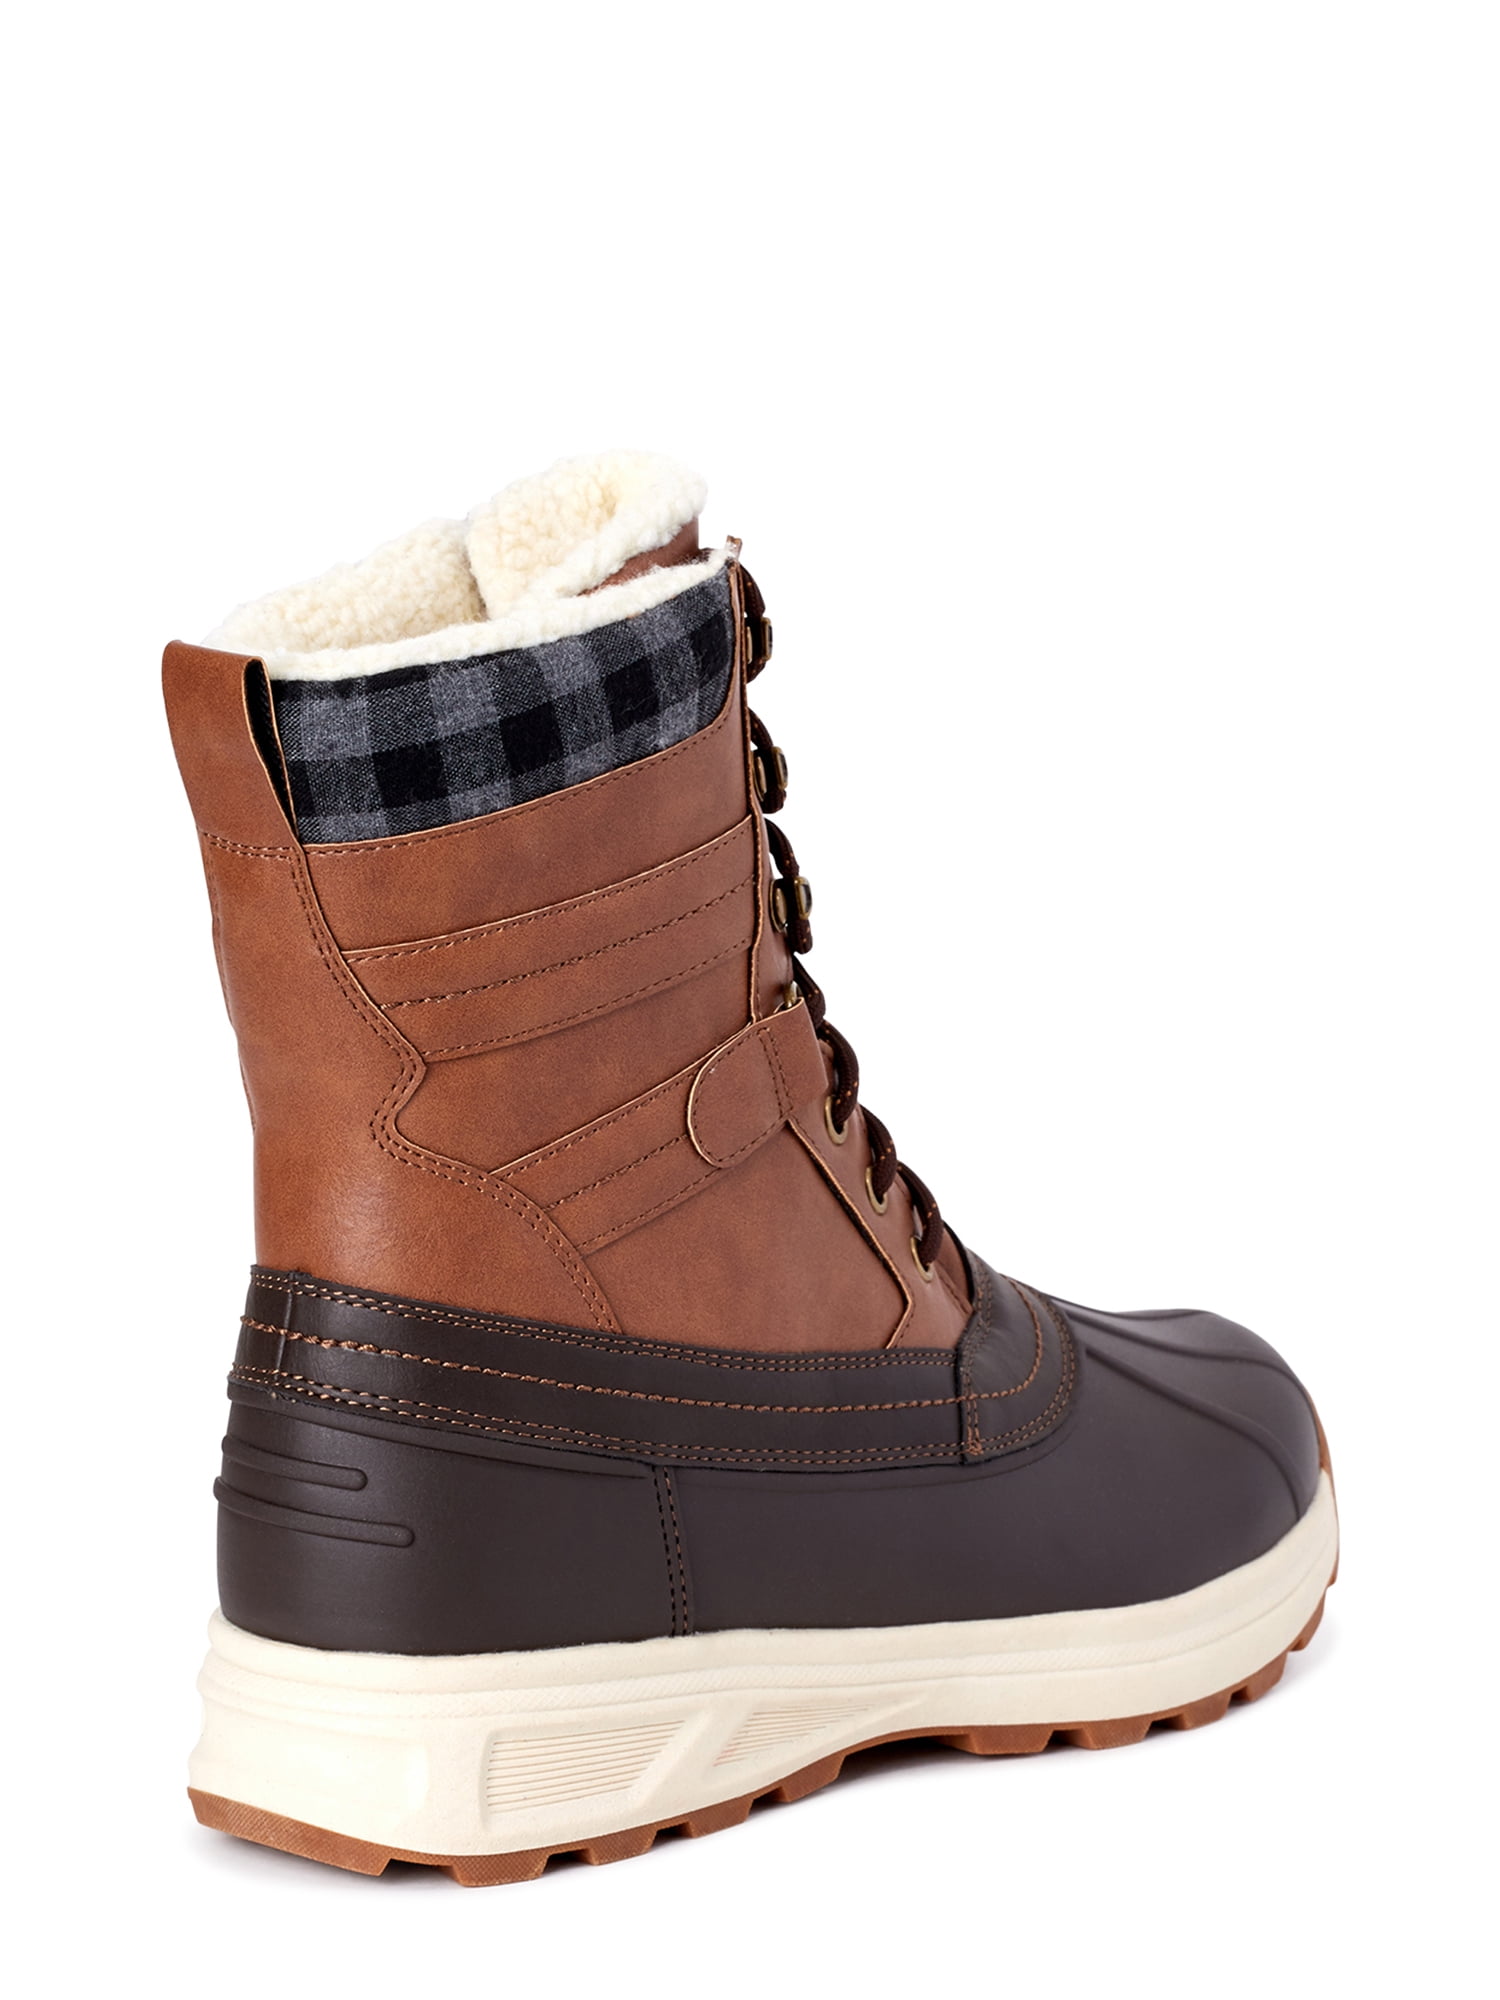 George Men's Sherpa Winter Boots 